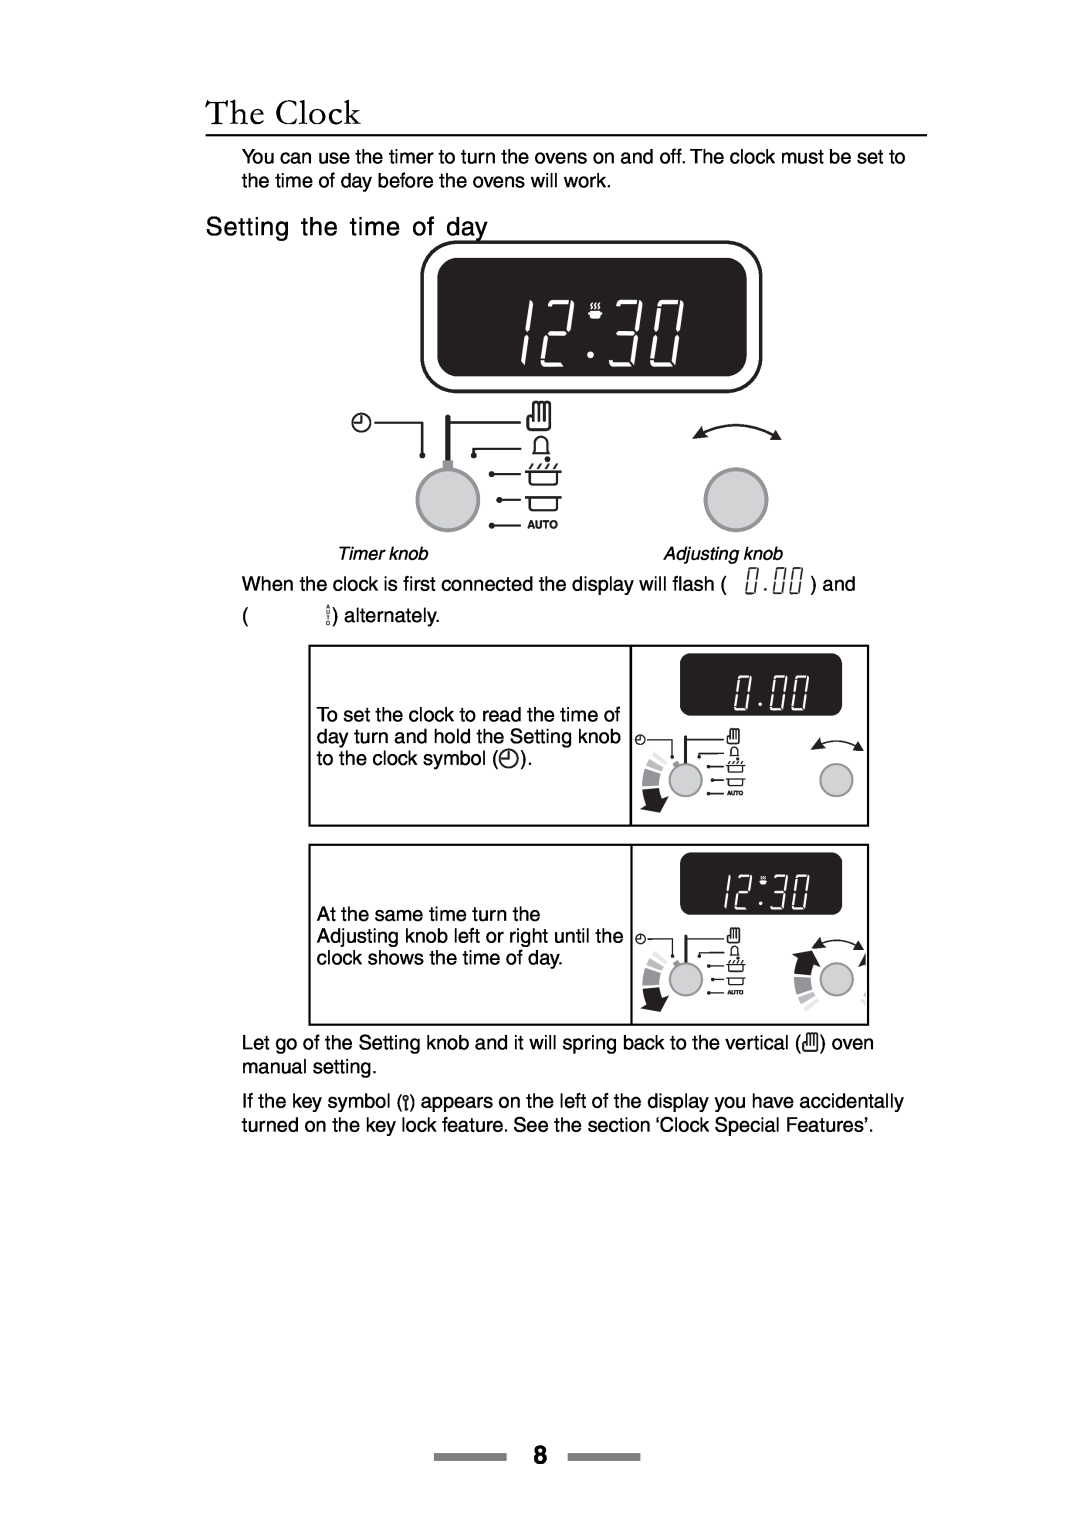 Rangemaster U105510-01 manual The Clock, Setting the time of day 